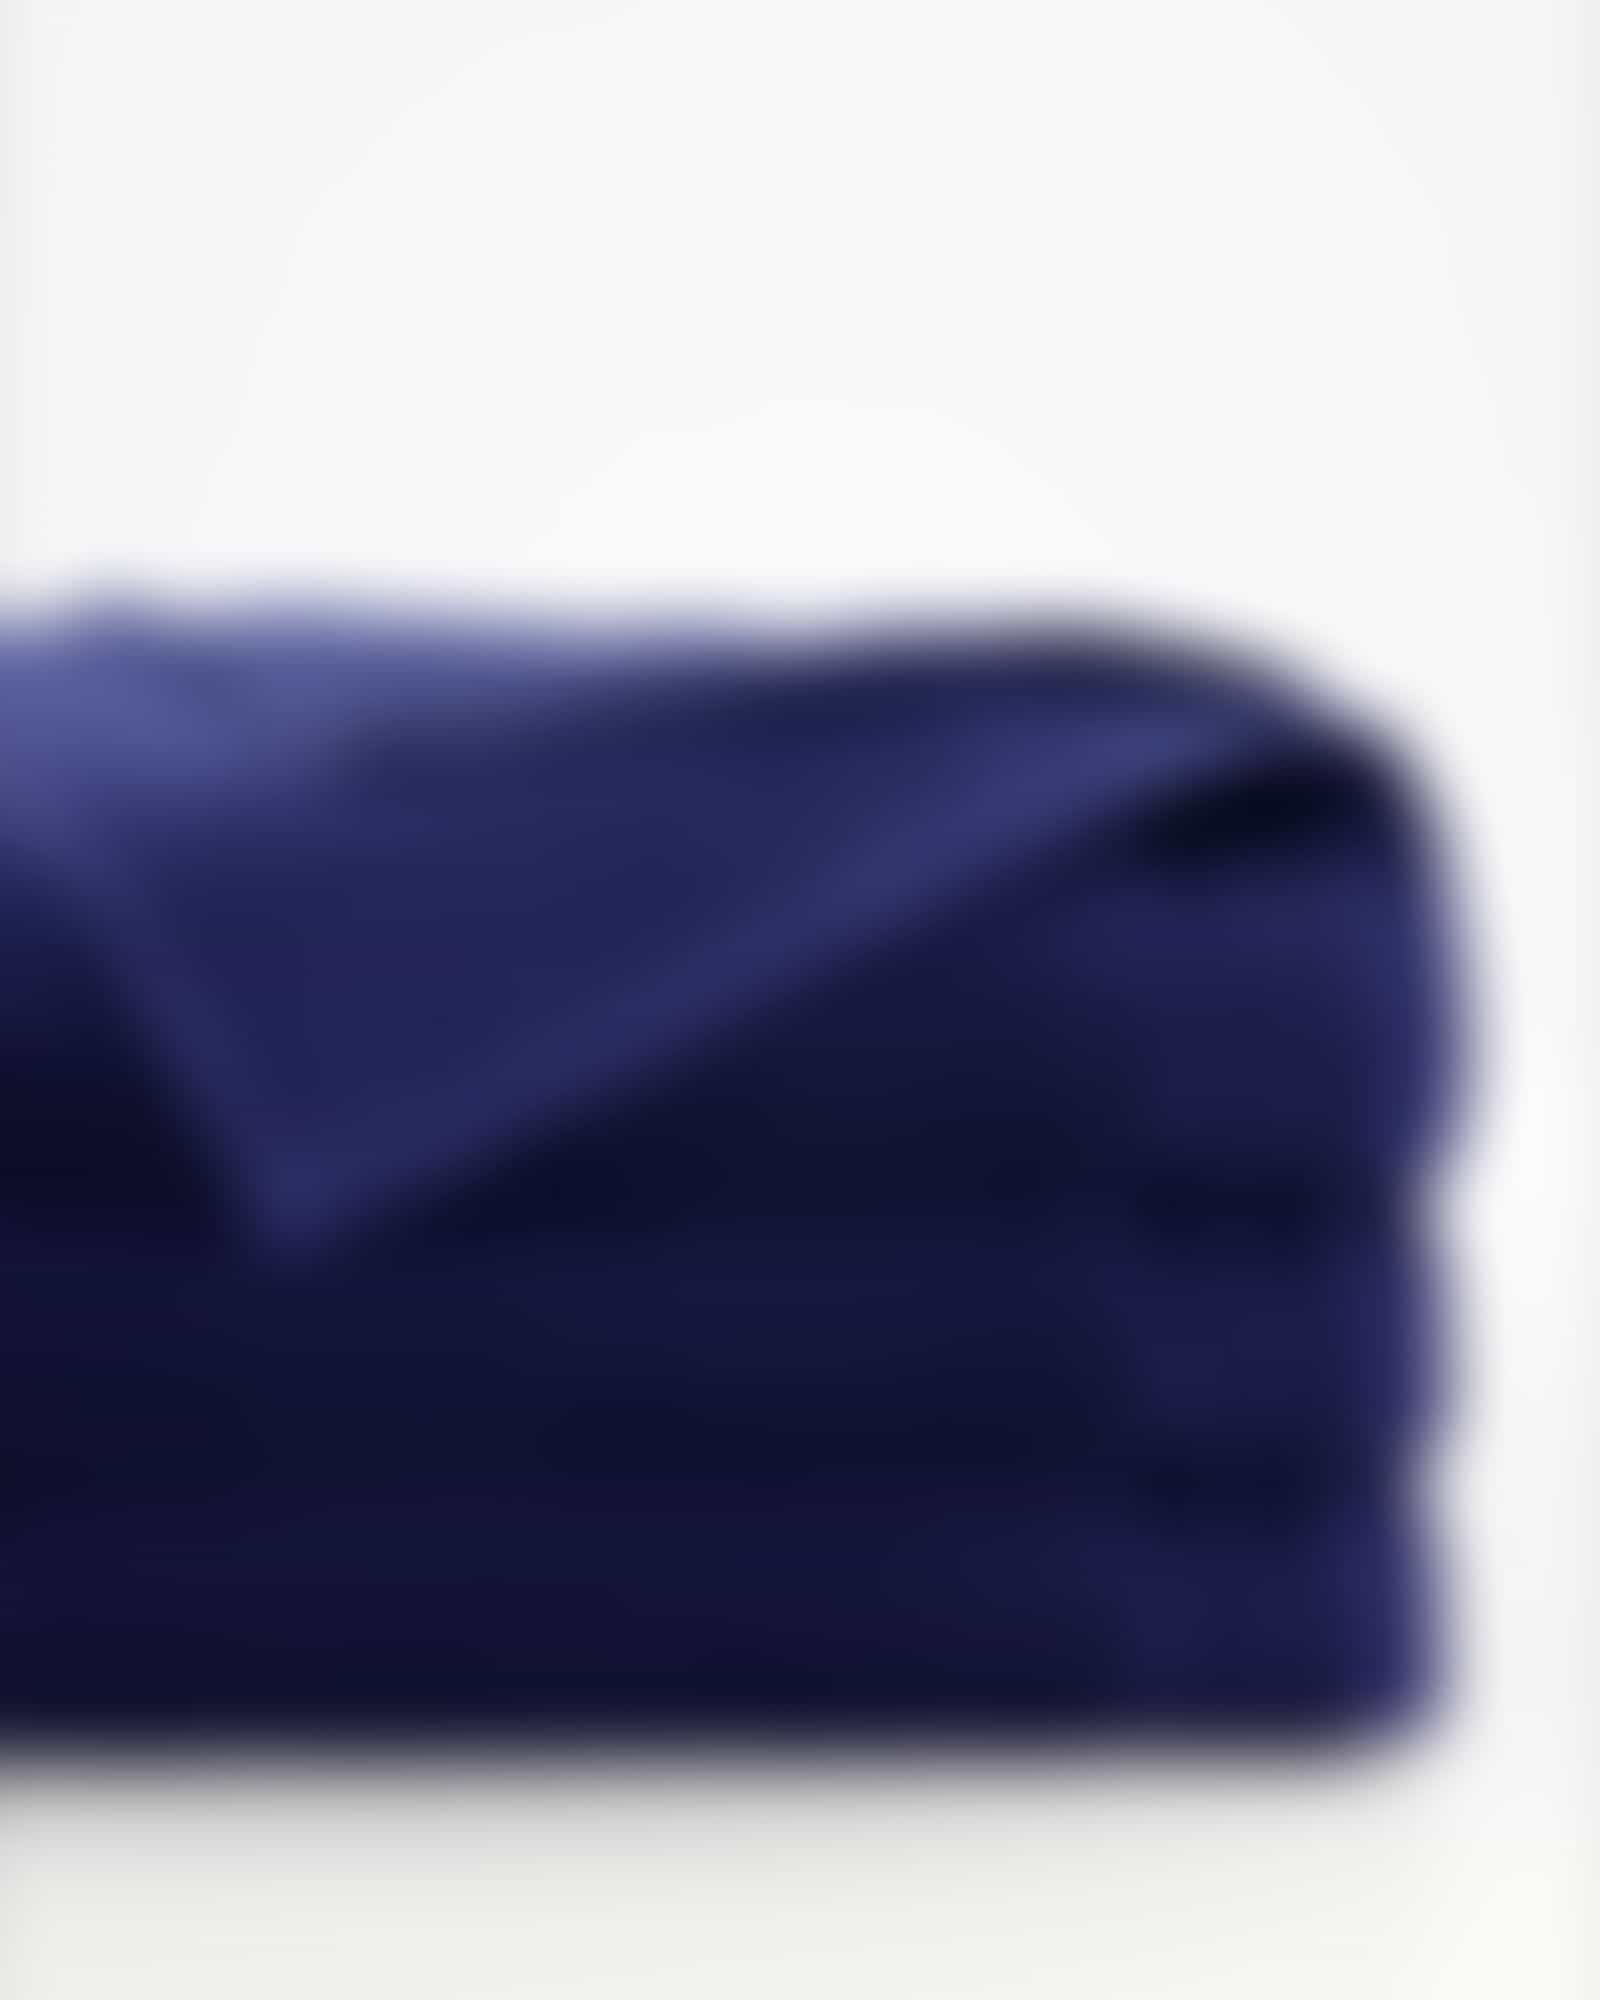 Vossen Handtücher Calypso Feeling - Farbe: marine blau - 4930 Detailbild 2